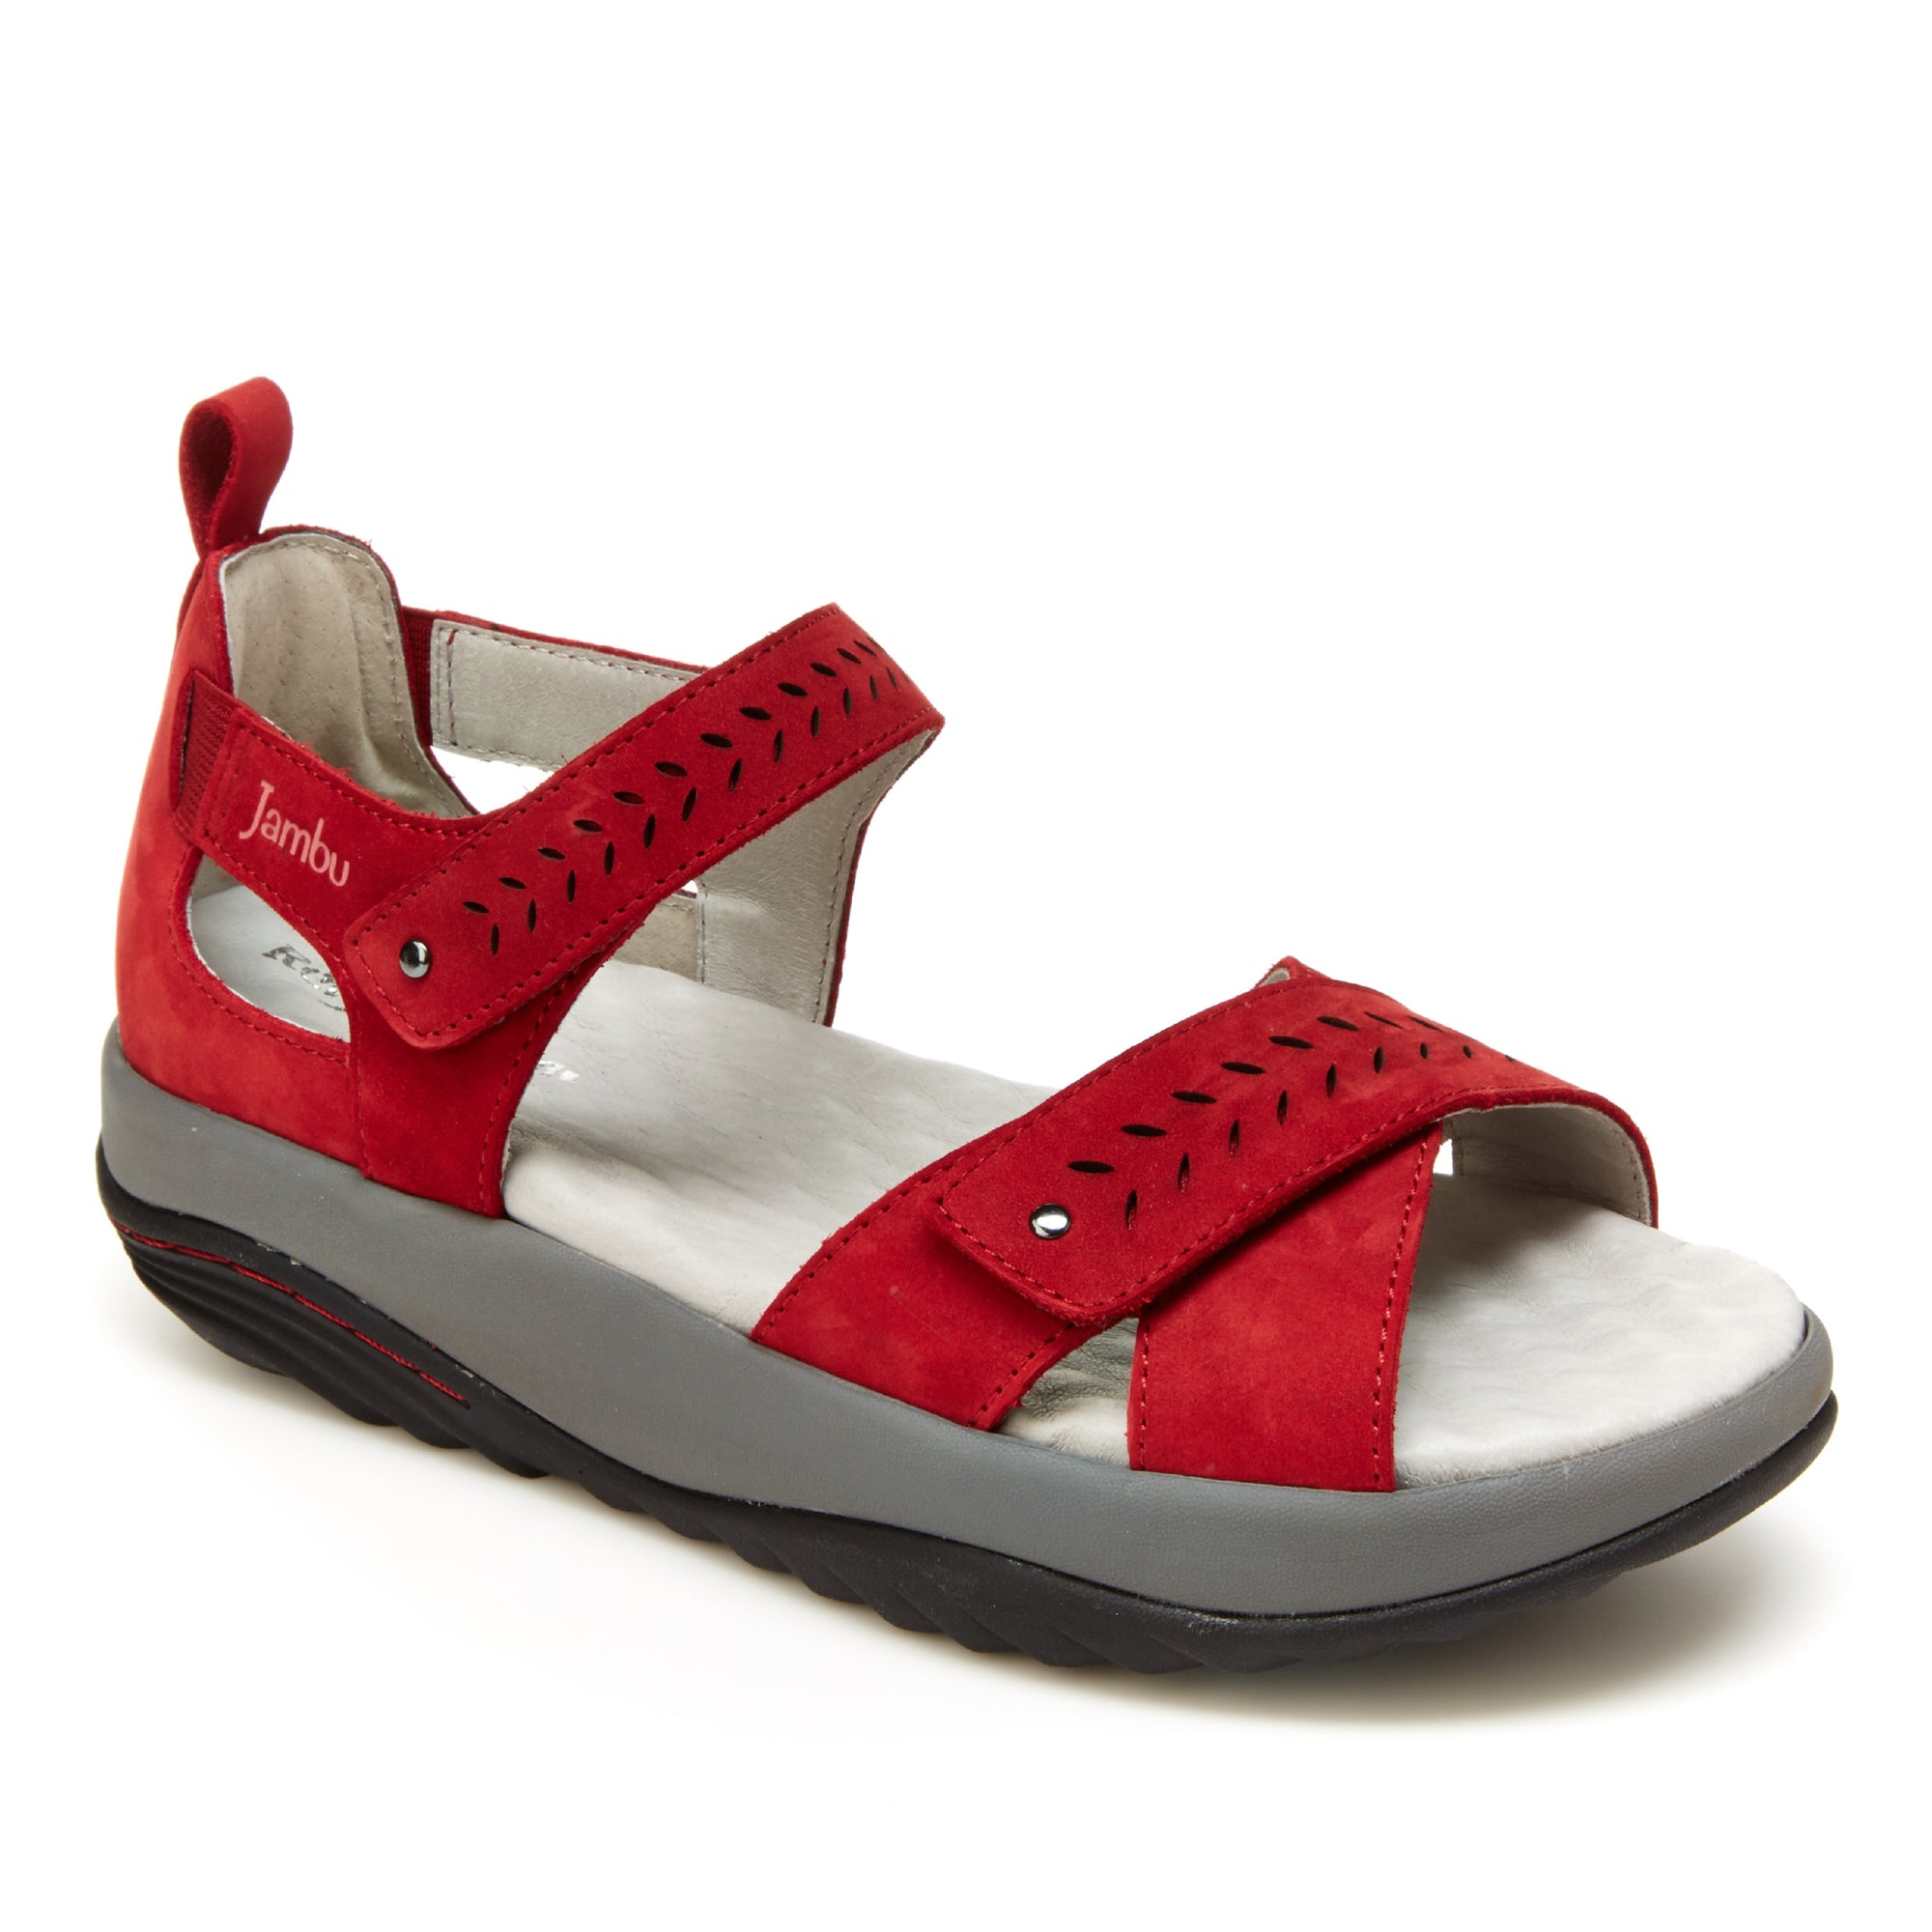 Jambu Sedona Red Shoes